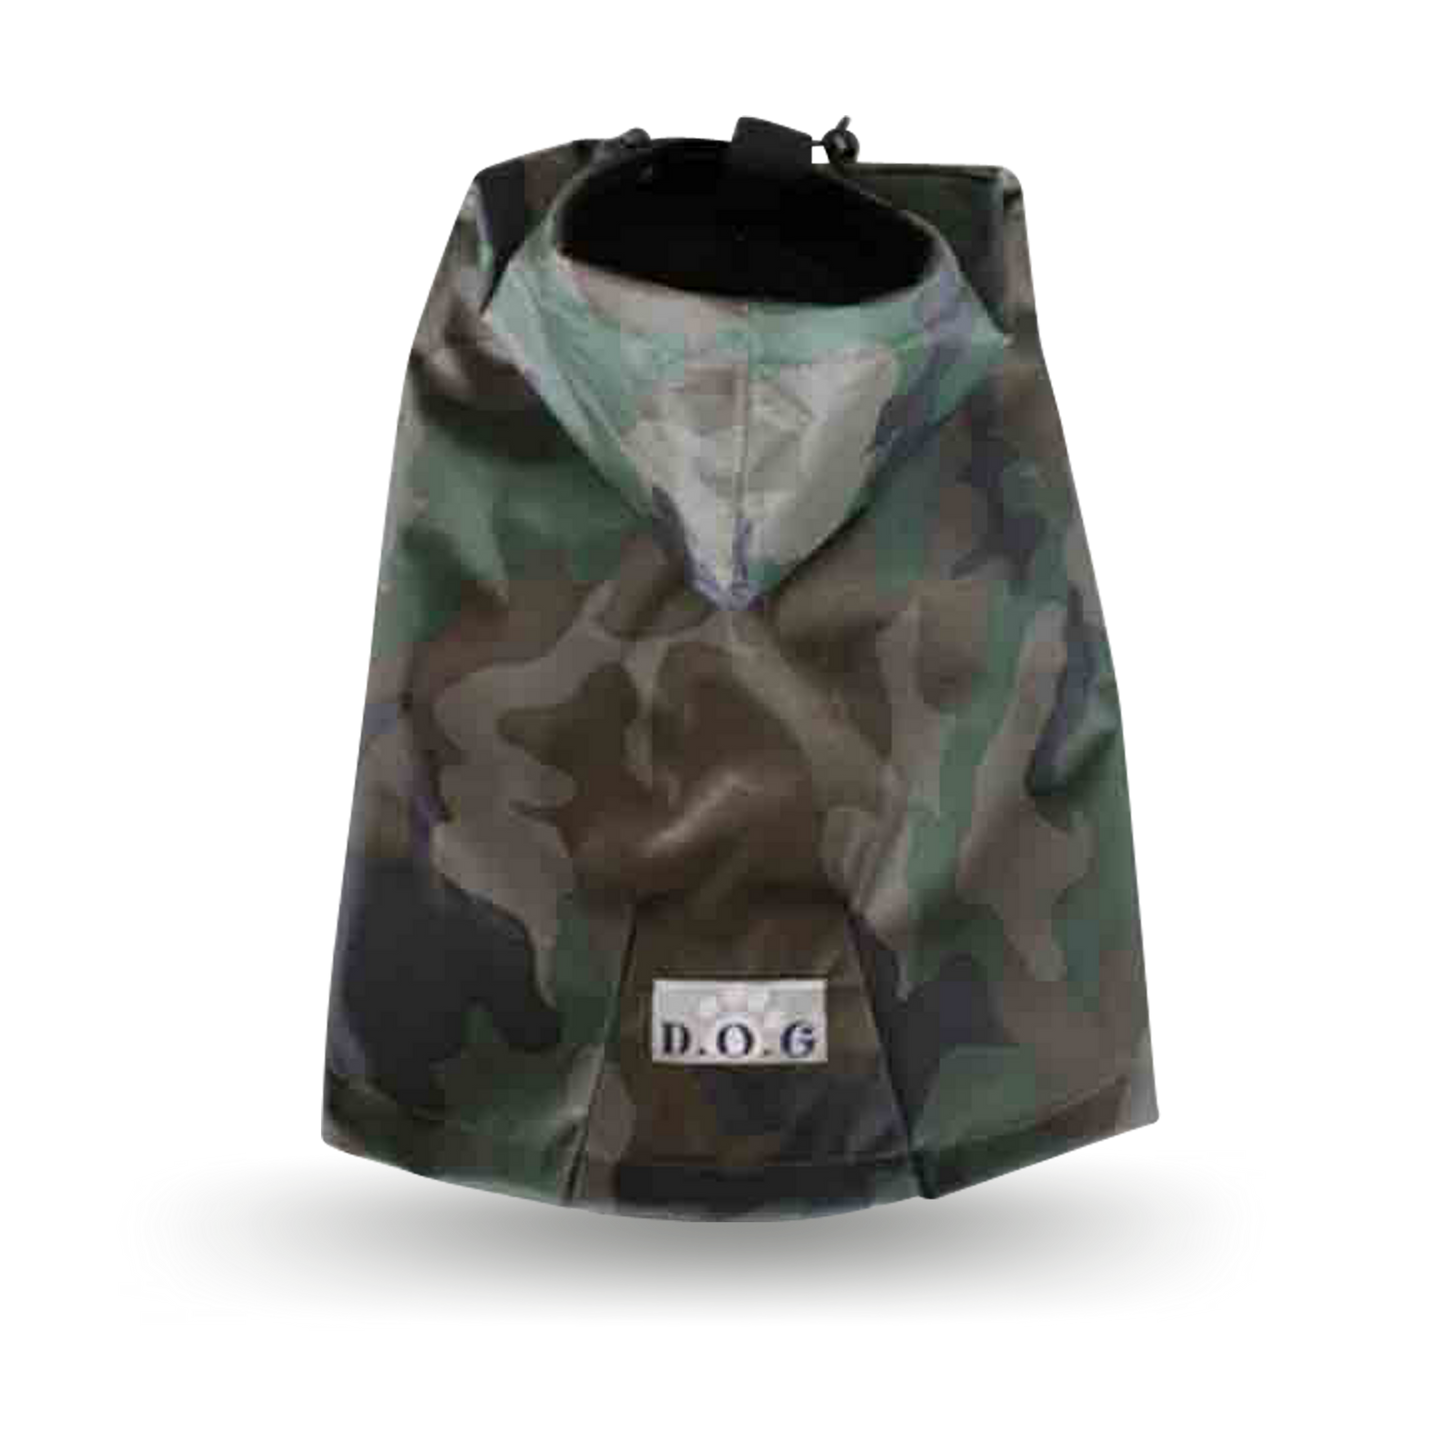 Camouflage Pug Raincoat